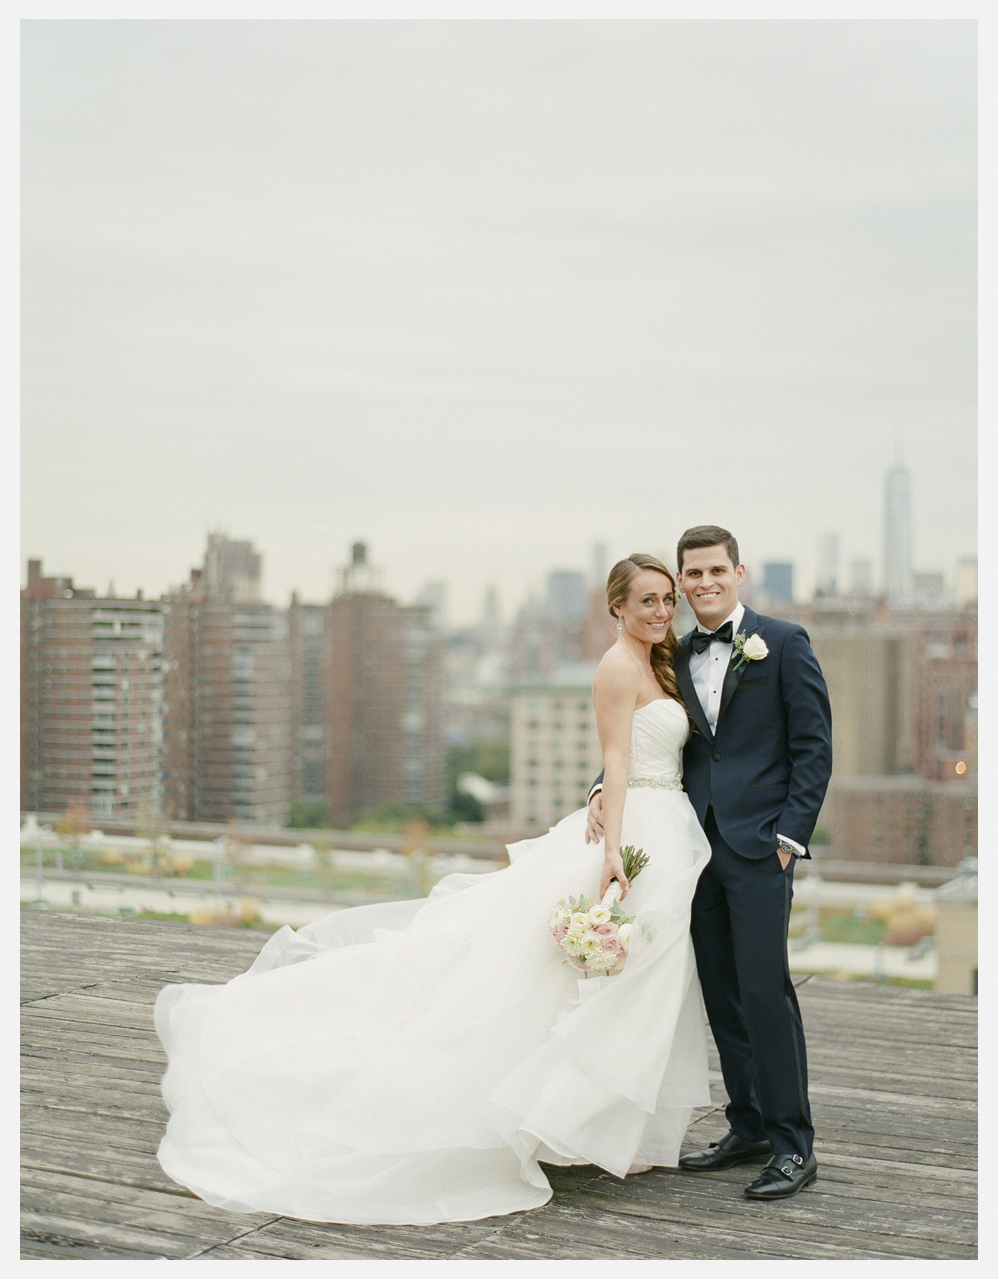 Studio 450 rooftop wedding photos by Alicia Swedenborg, New York